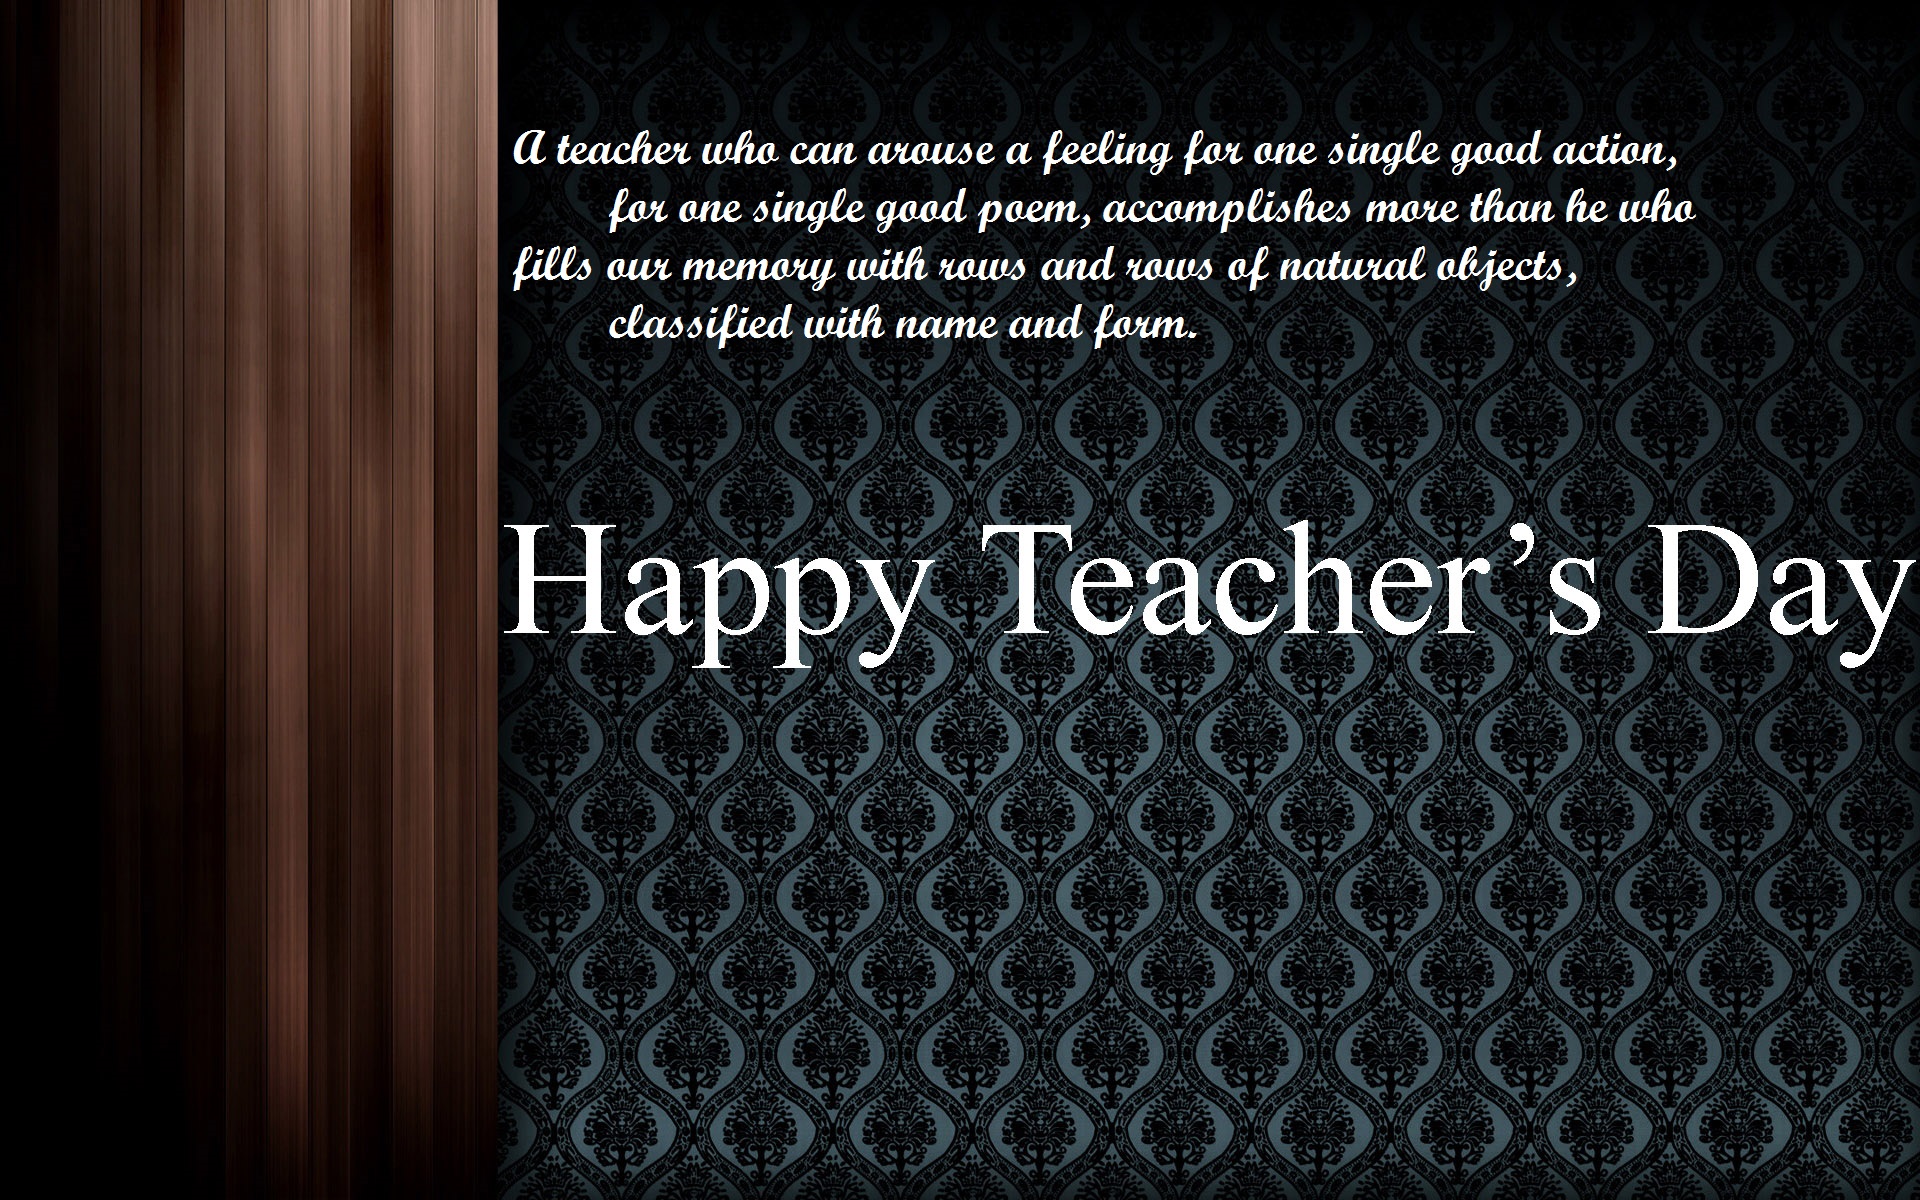 Teachers Day Images Hd - 1920x1200 Wallpaper 